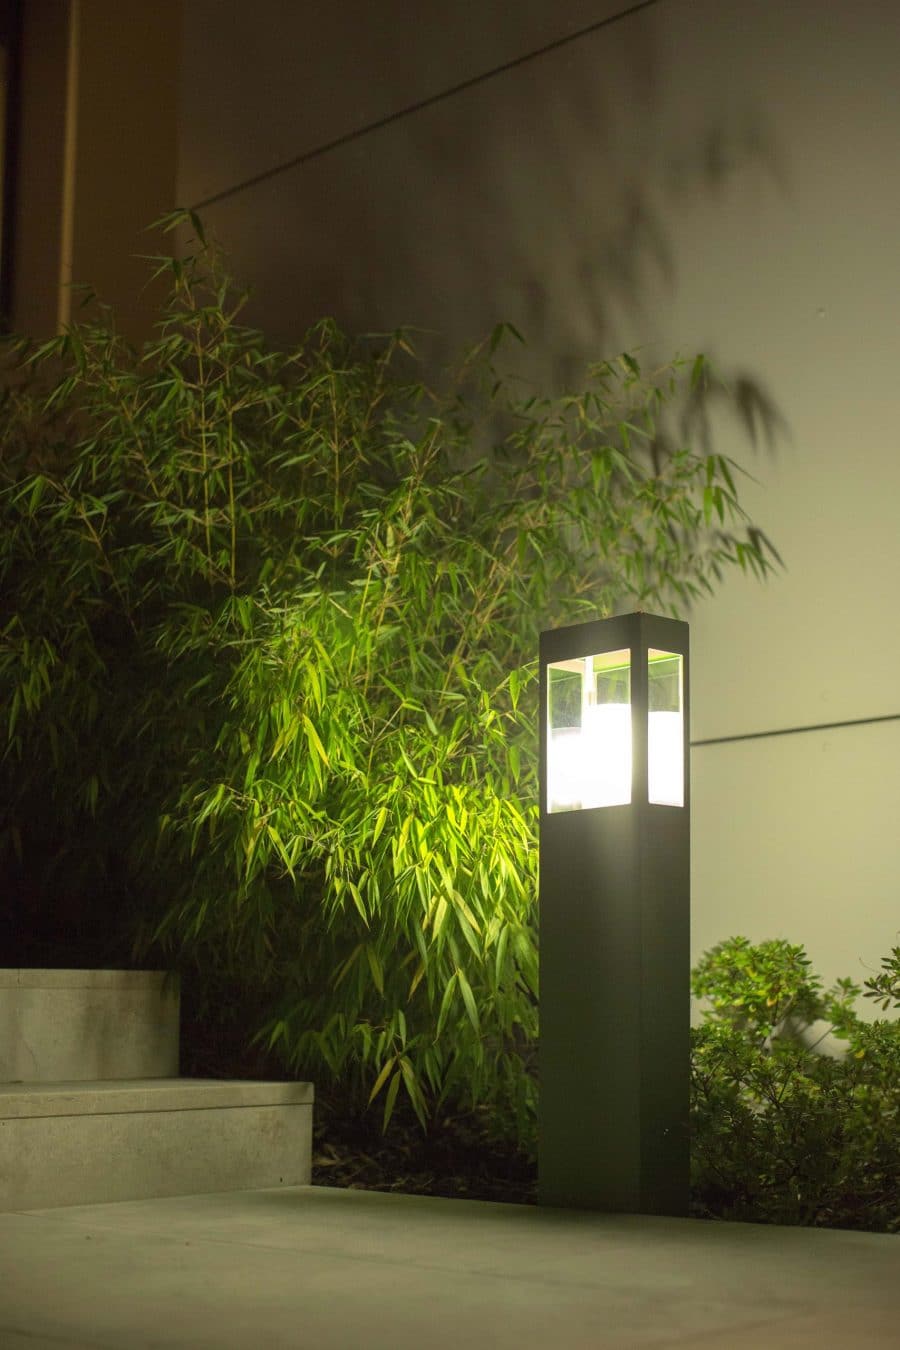 Brick tuinverlichting roger pradier buitenlamp tuinextra kaatsheuvel